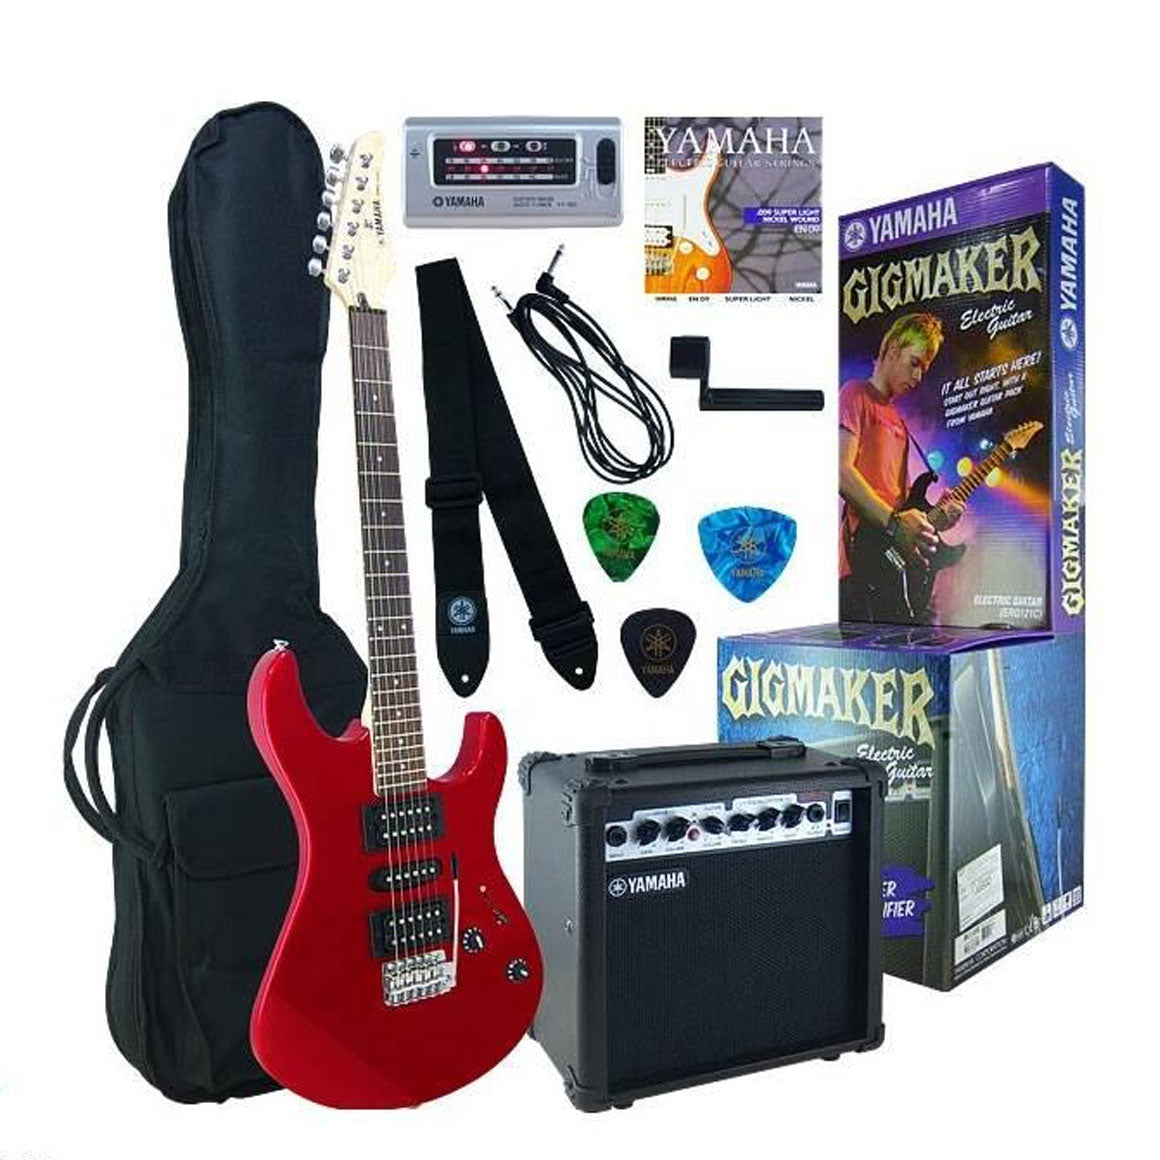 Yamaha Gigmaker Electric Guitar Package ERG121 Model - Metallic Red